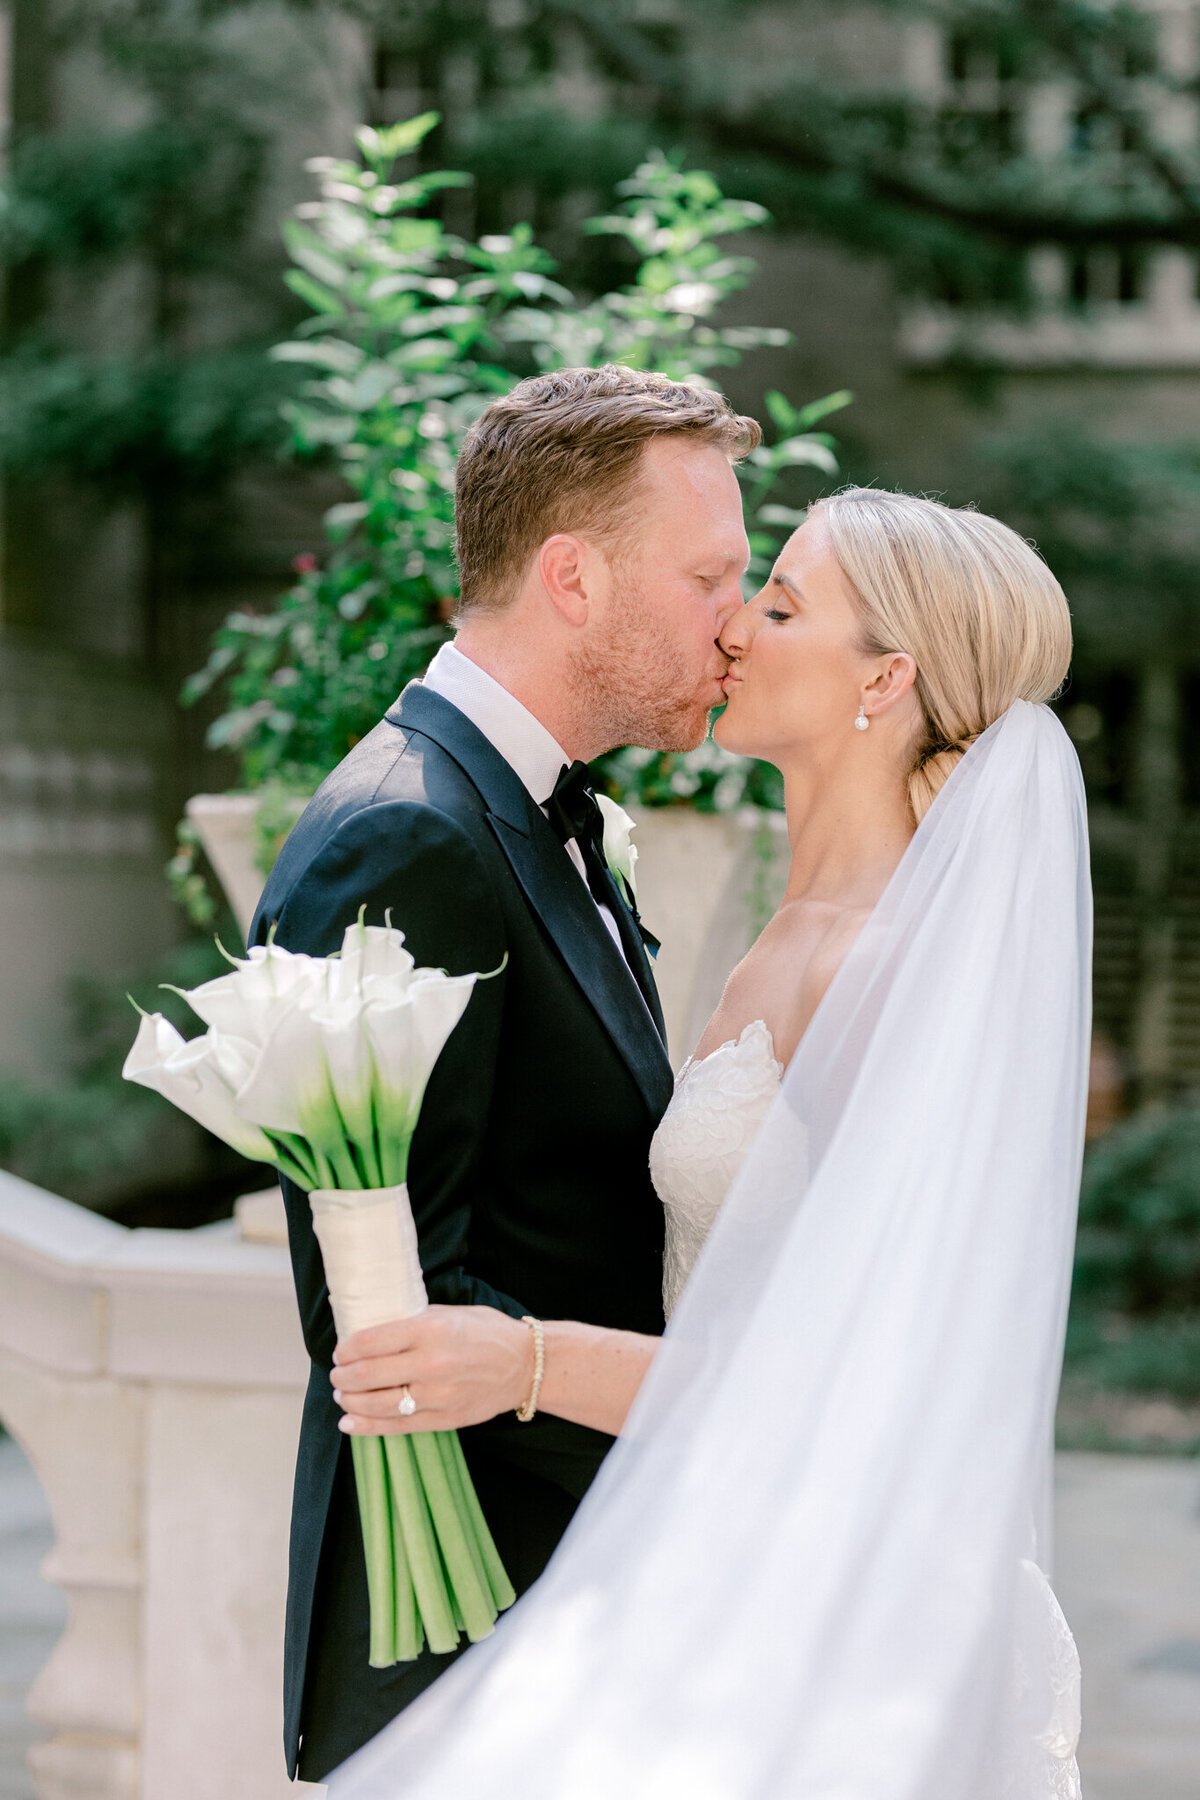 Katelyn & Kyle's Wedding at the Adolphus Hotel | Dallas Wedding Photographer | Sami Kathryn Photography-222